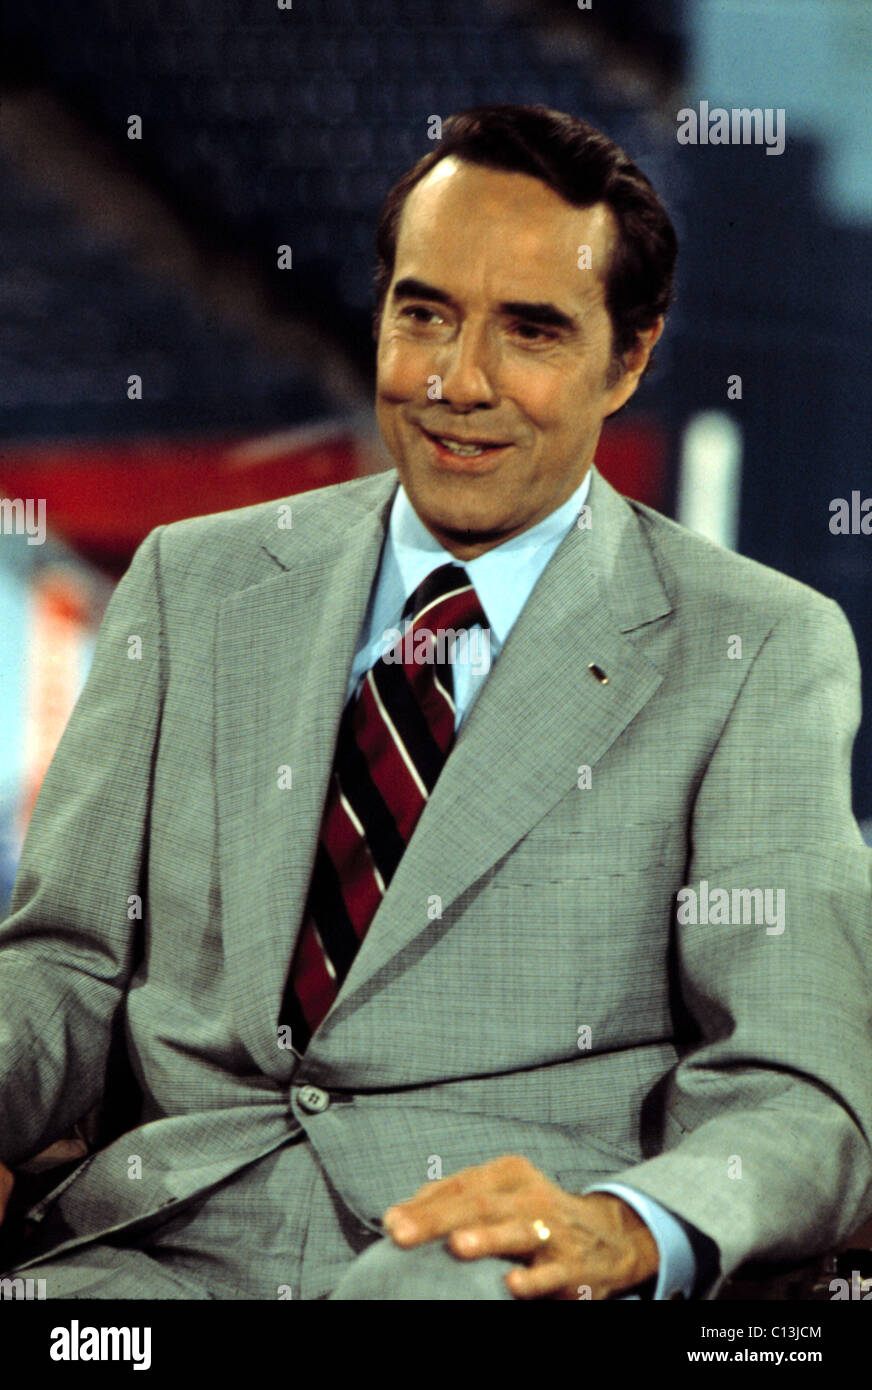 Robert Dole, Republican Senator from Kansas, 1969-1996. Presidential candidate, 1996. photo by Ann LiMongello Stock Photo